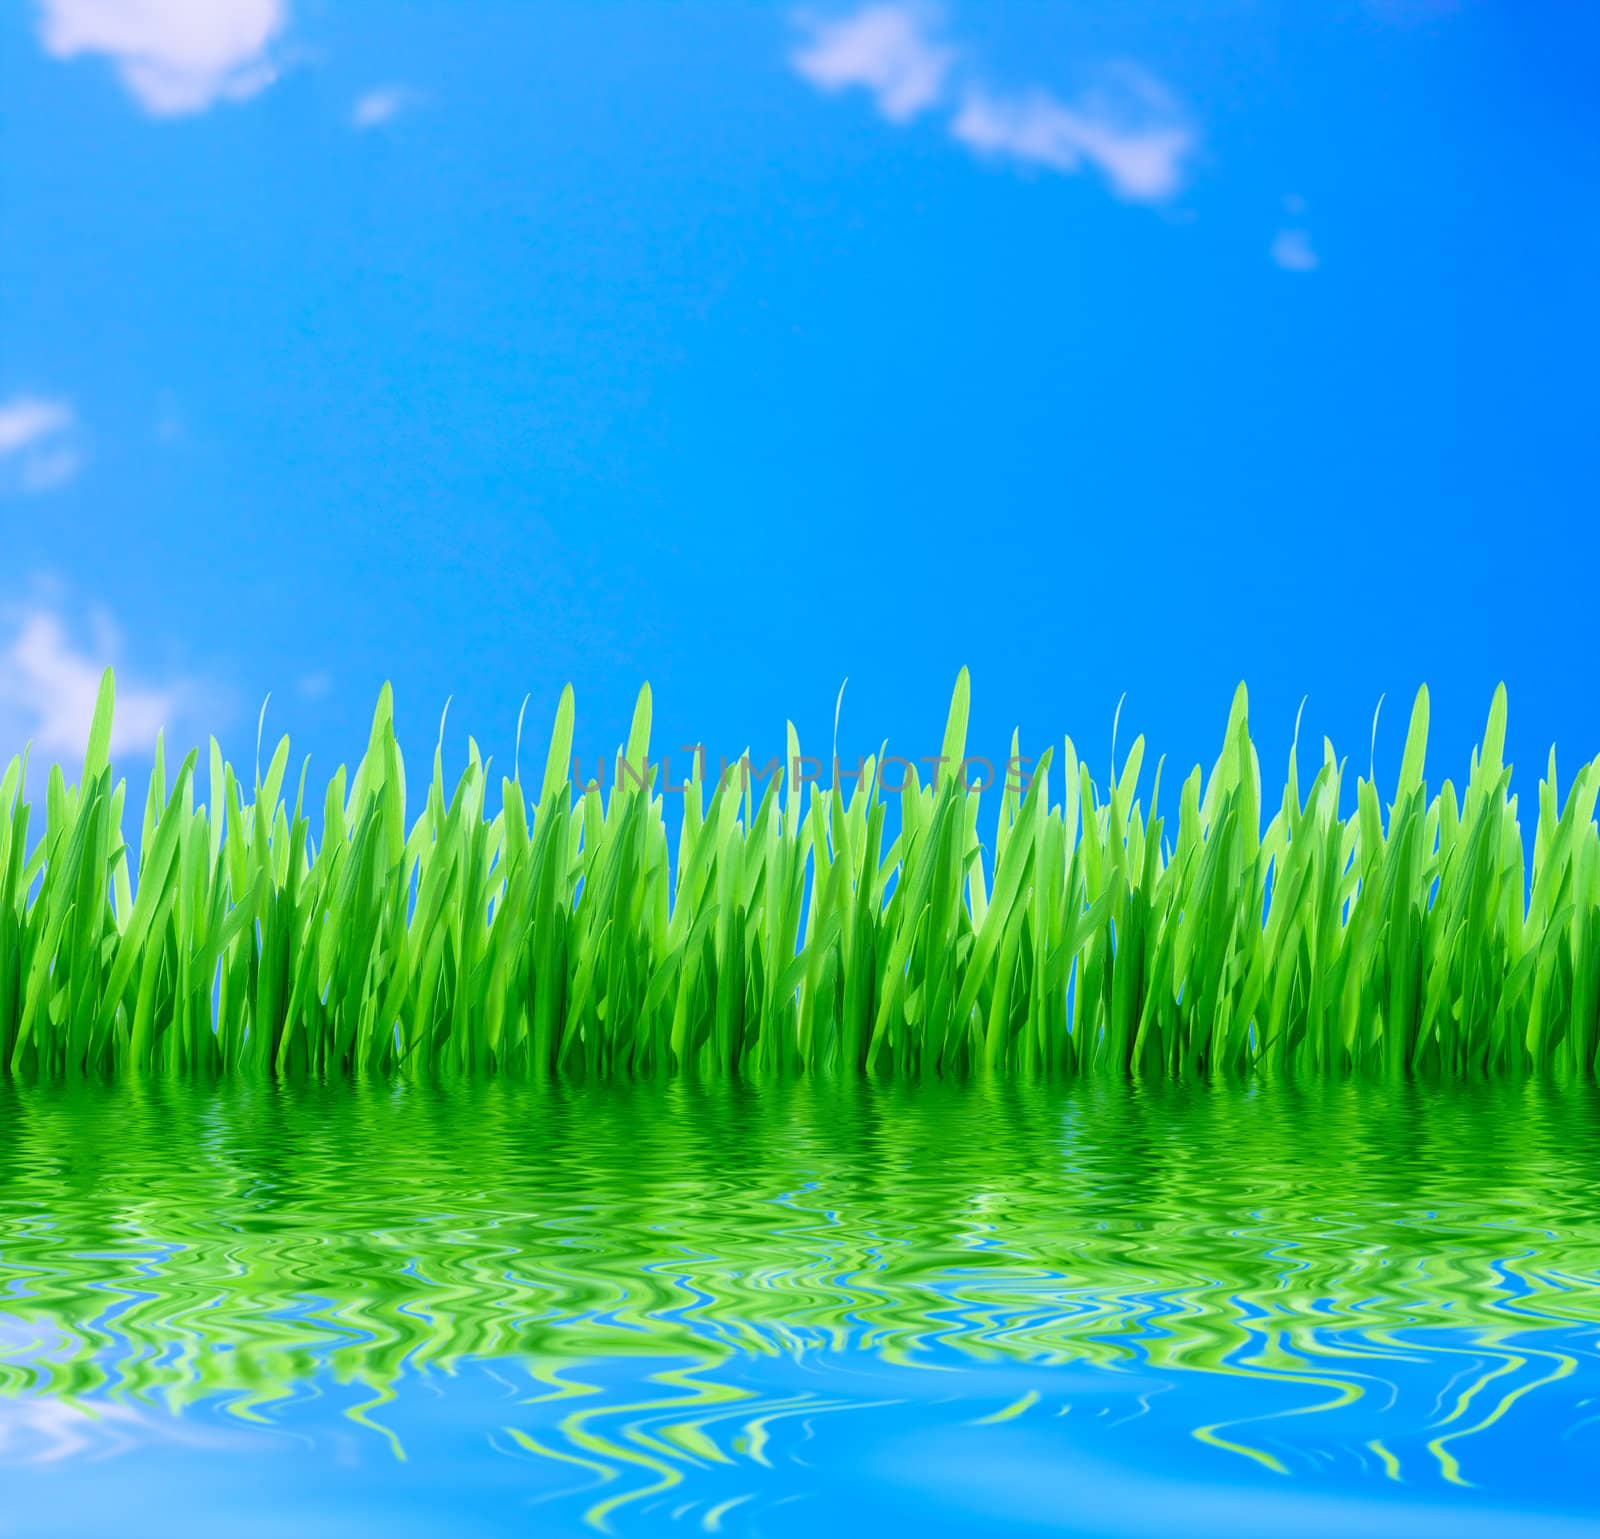 Green grass wth blue sky